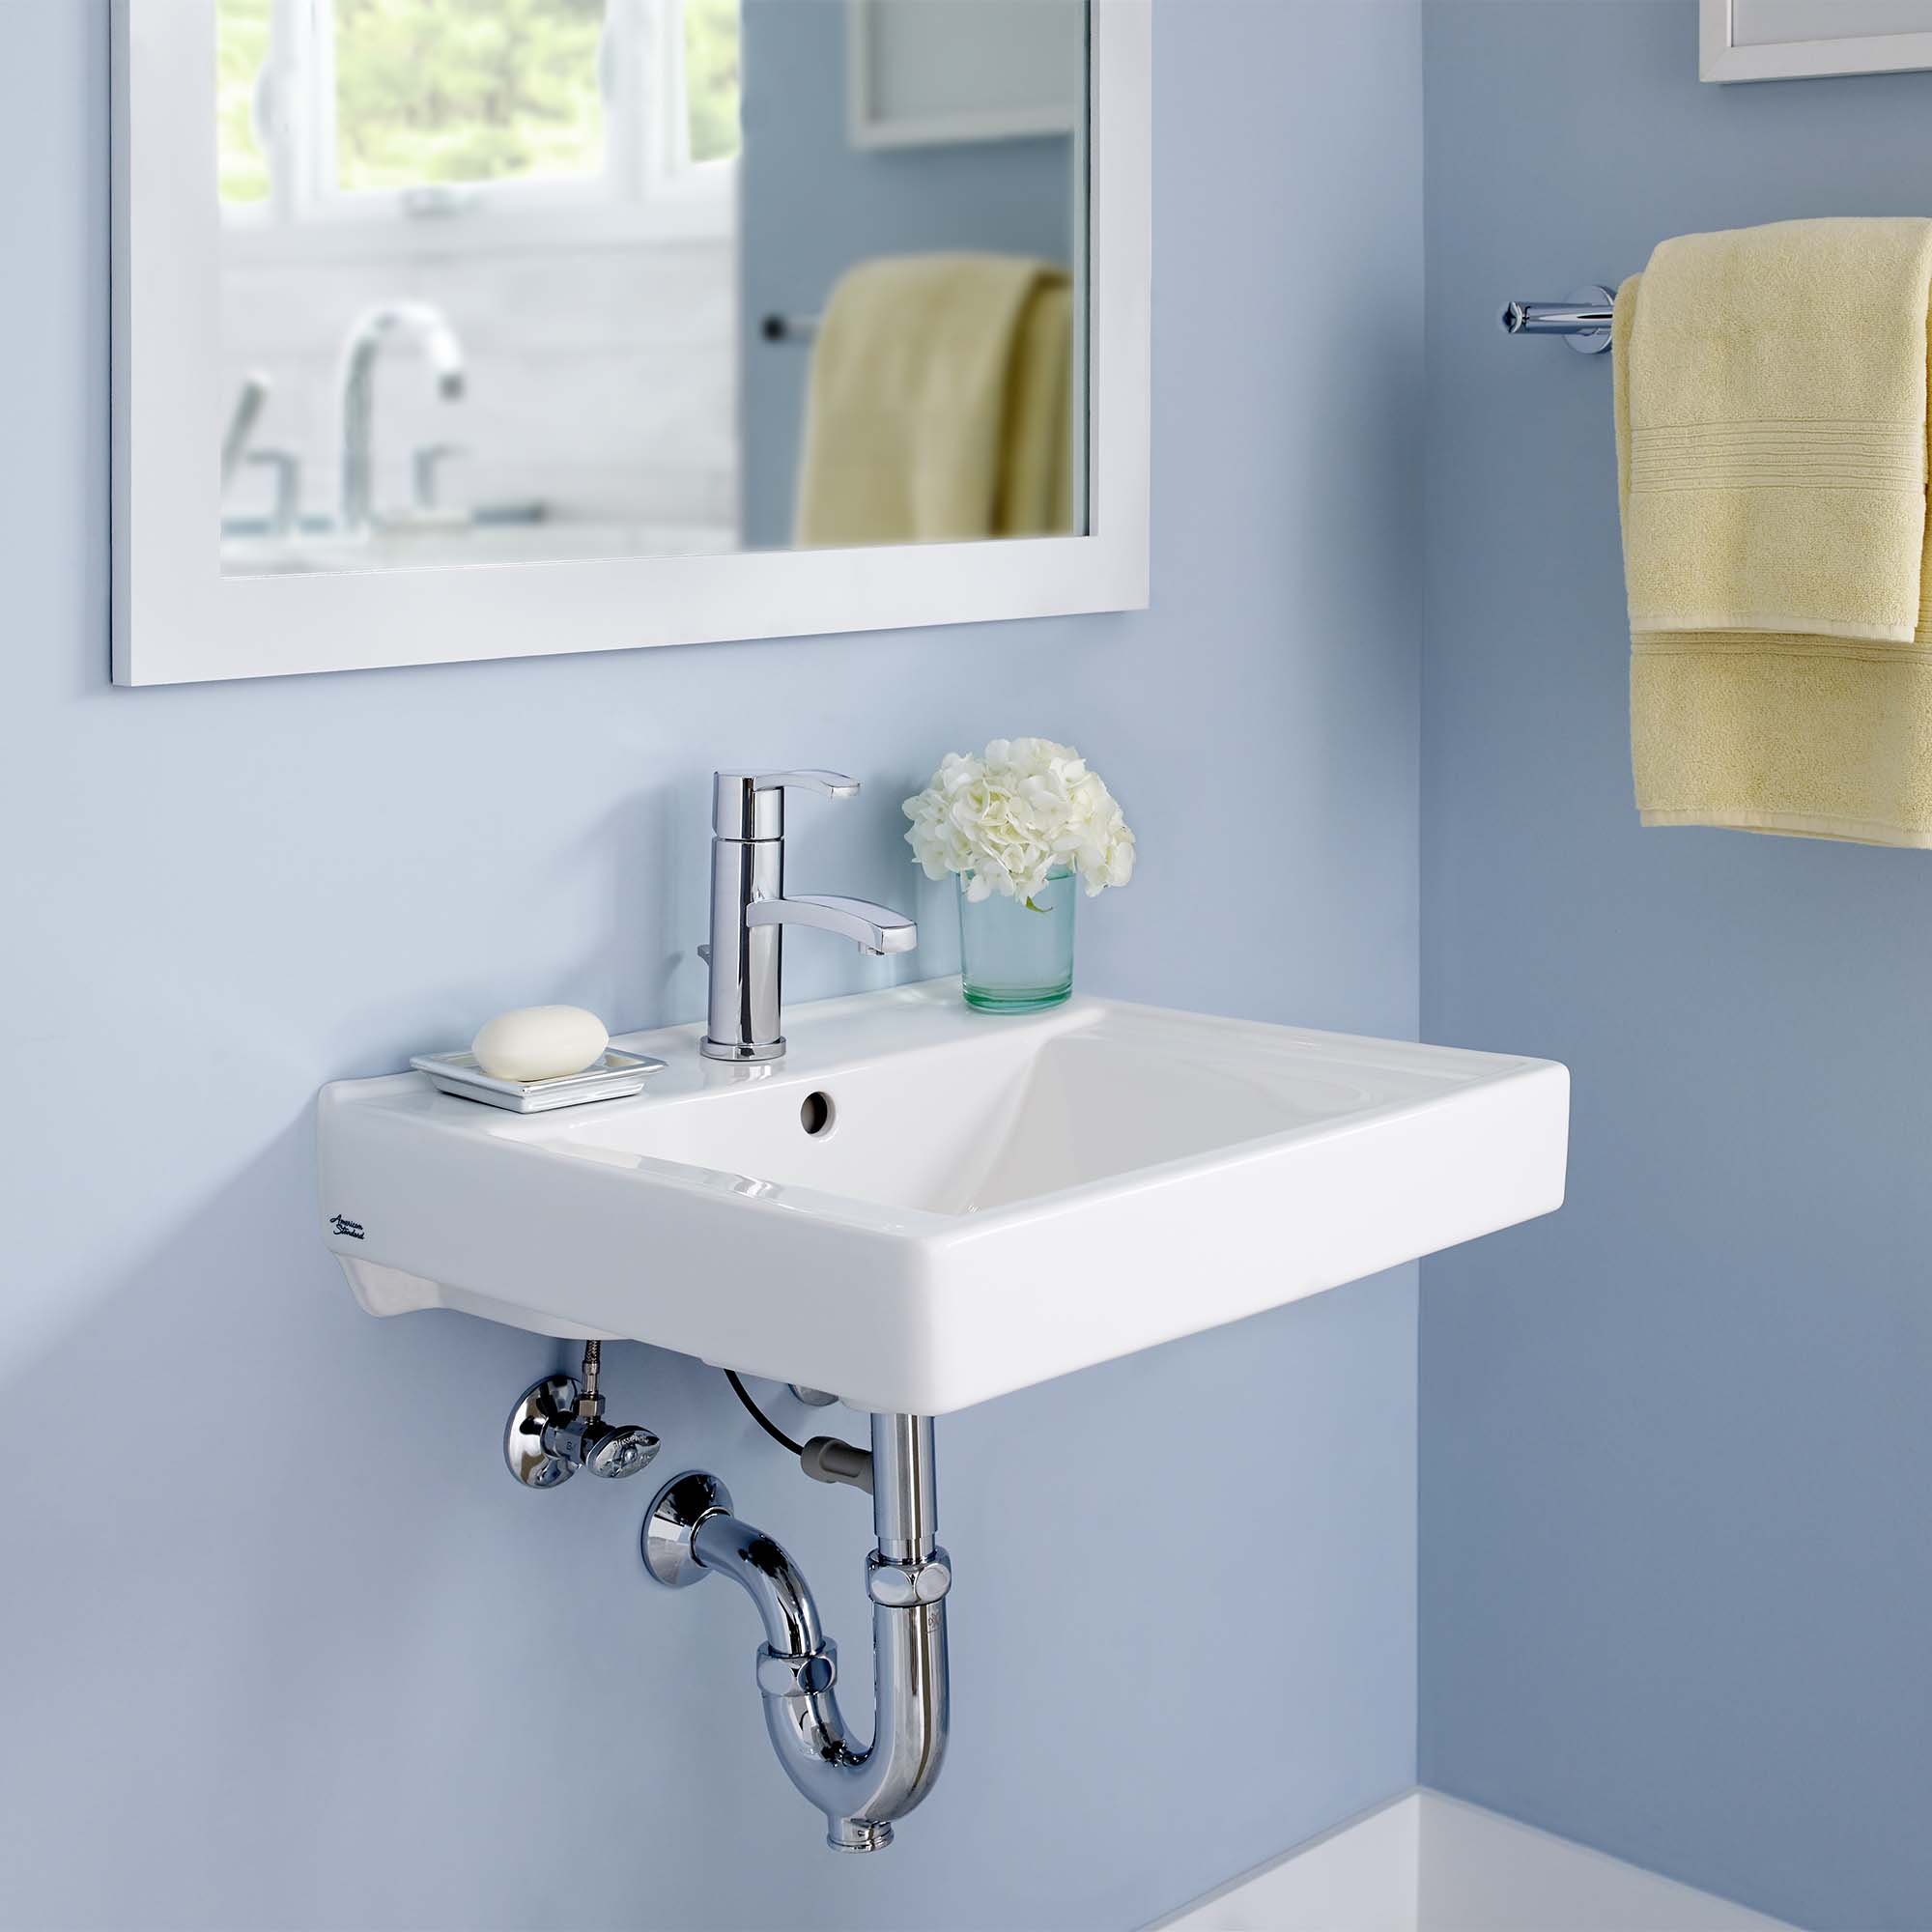 Berwick® Single Hole Single-Handle Bathroom Faucet
1.2 gpm/4.5 L/min With Lever Handle